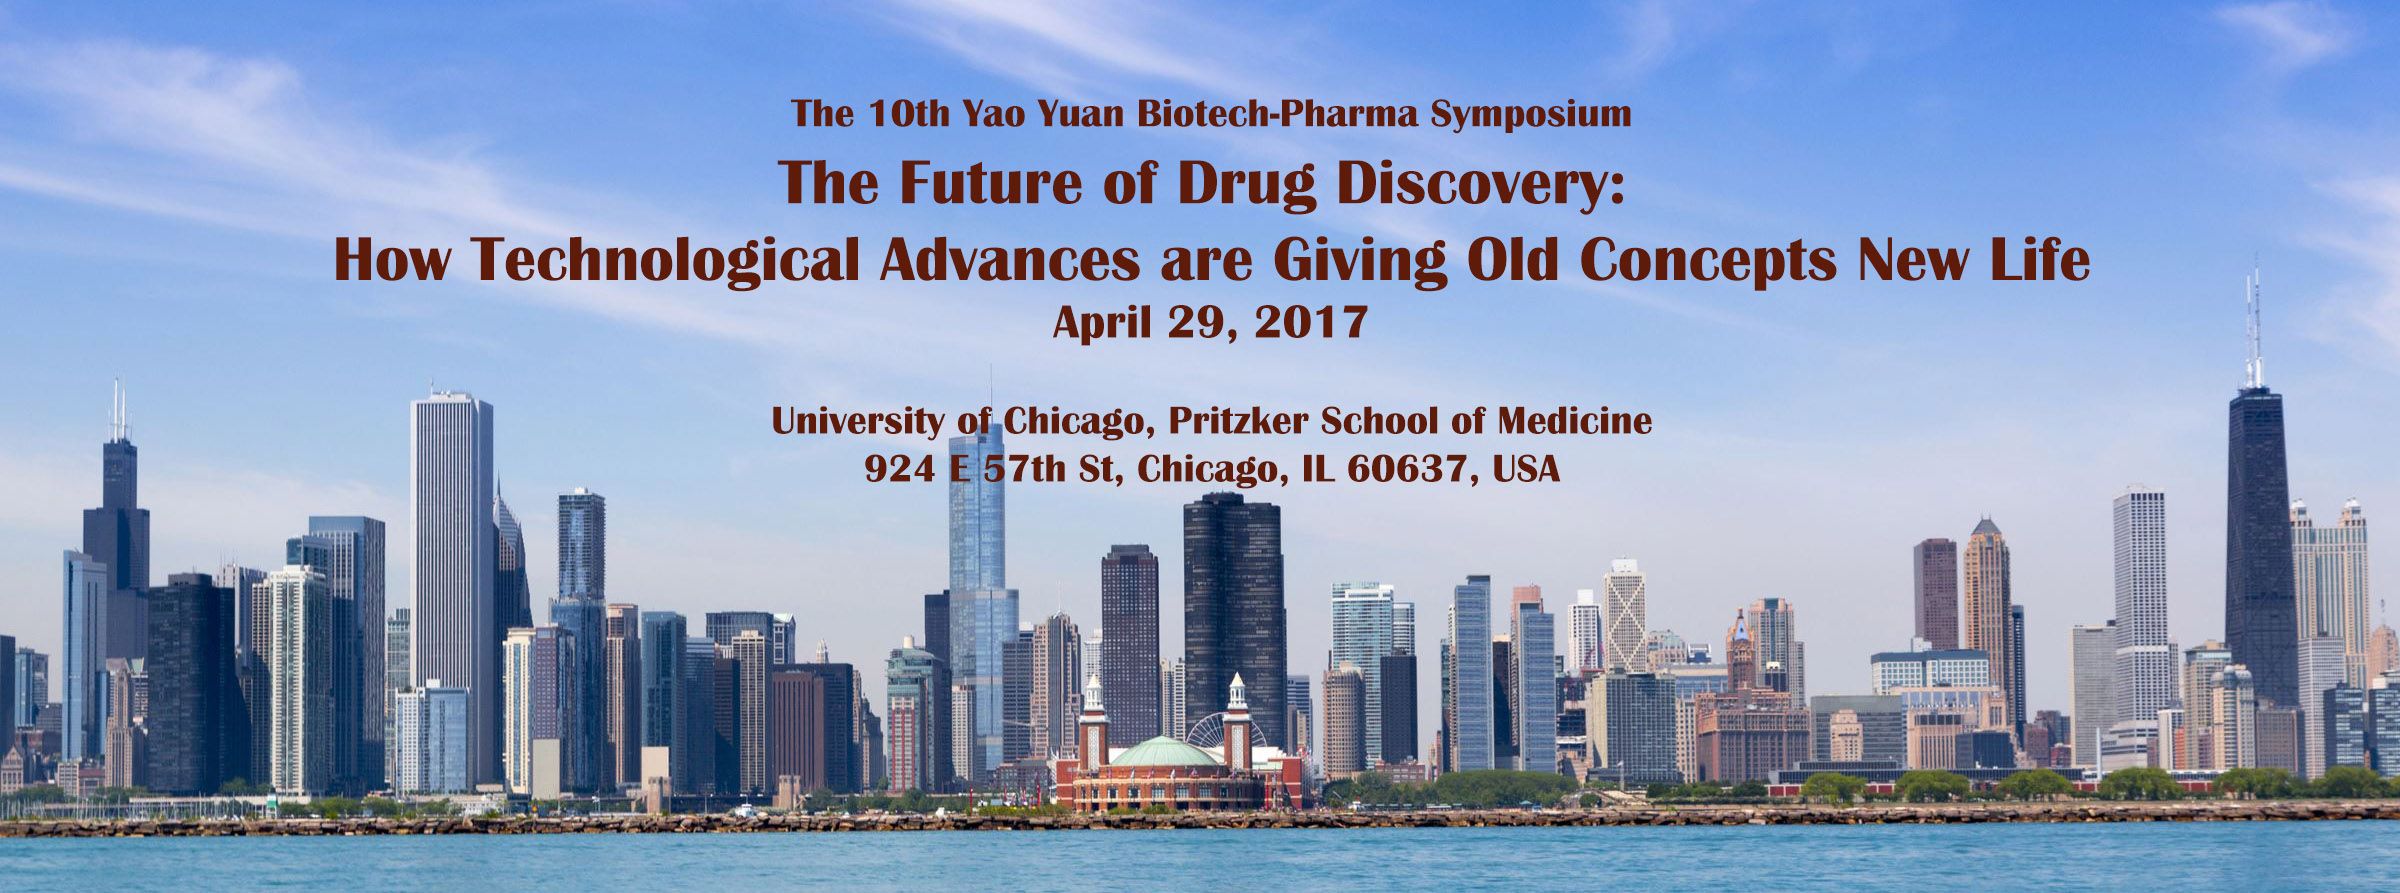 The 10th Yao Yuan Biotech-Pharma Symposium